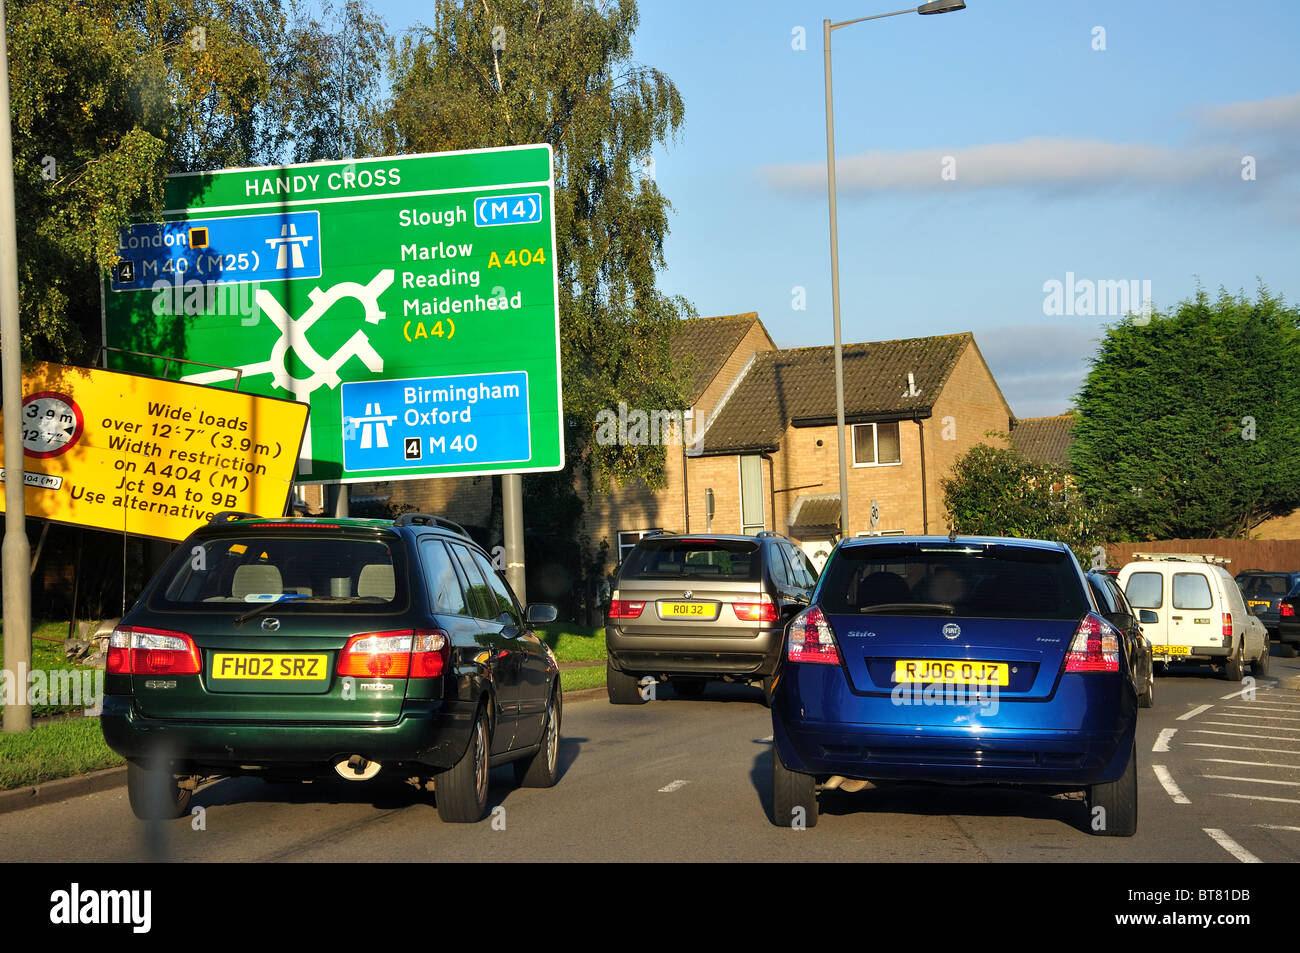 Handy Cross Roundabout, High Wycombe, Buckinghamshire, England, United Kingdom Stock Photo